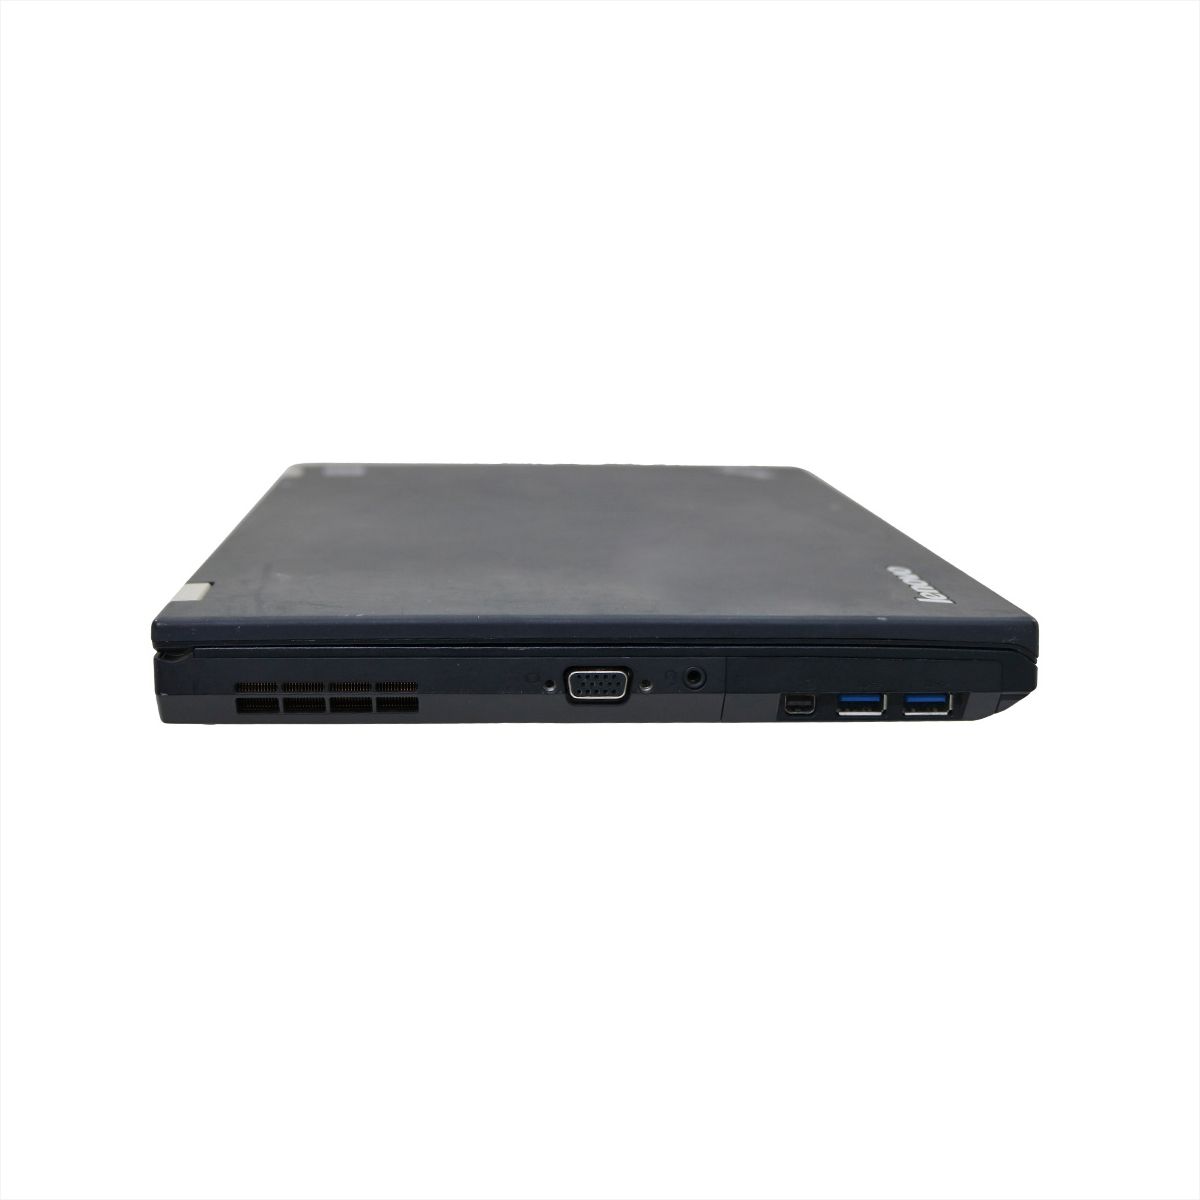 Notebook Lenovo T430 Thinkpad i5 4gb 500gb - Usado